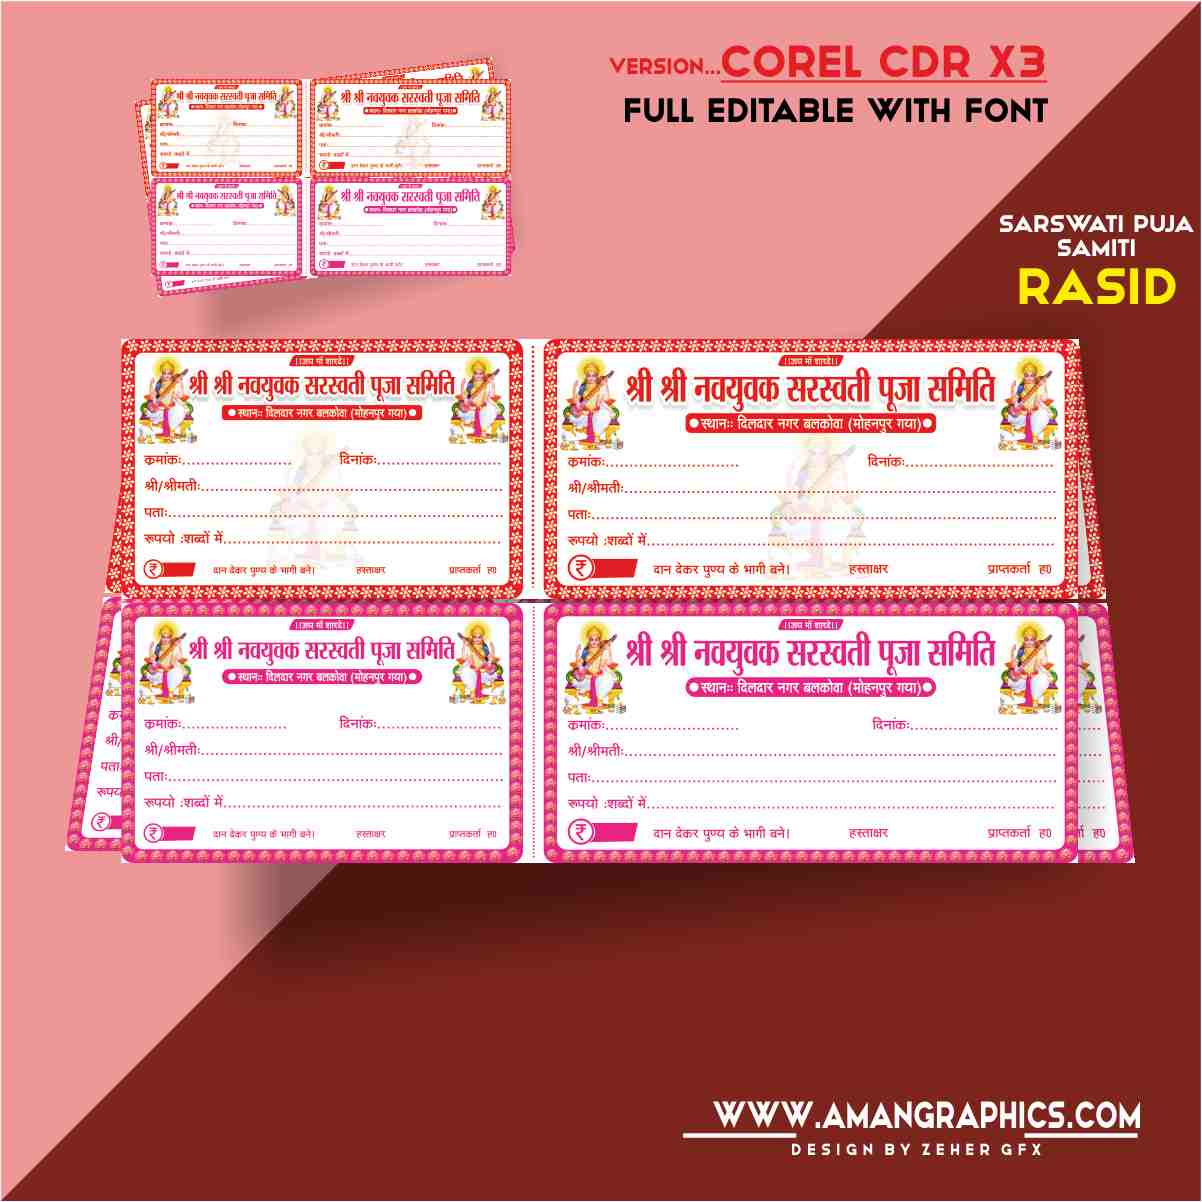 Sarswati Puja Banner Samiti Rasid Design Cdr File FLEX BANNER FLEX